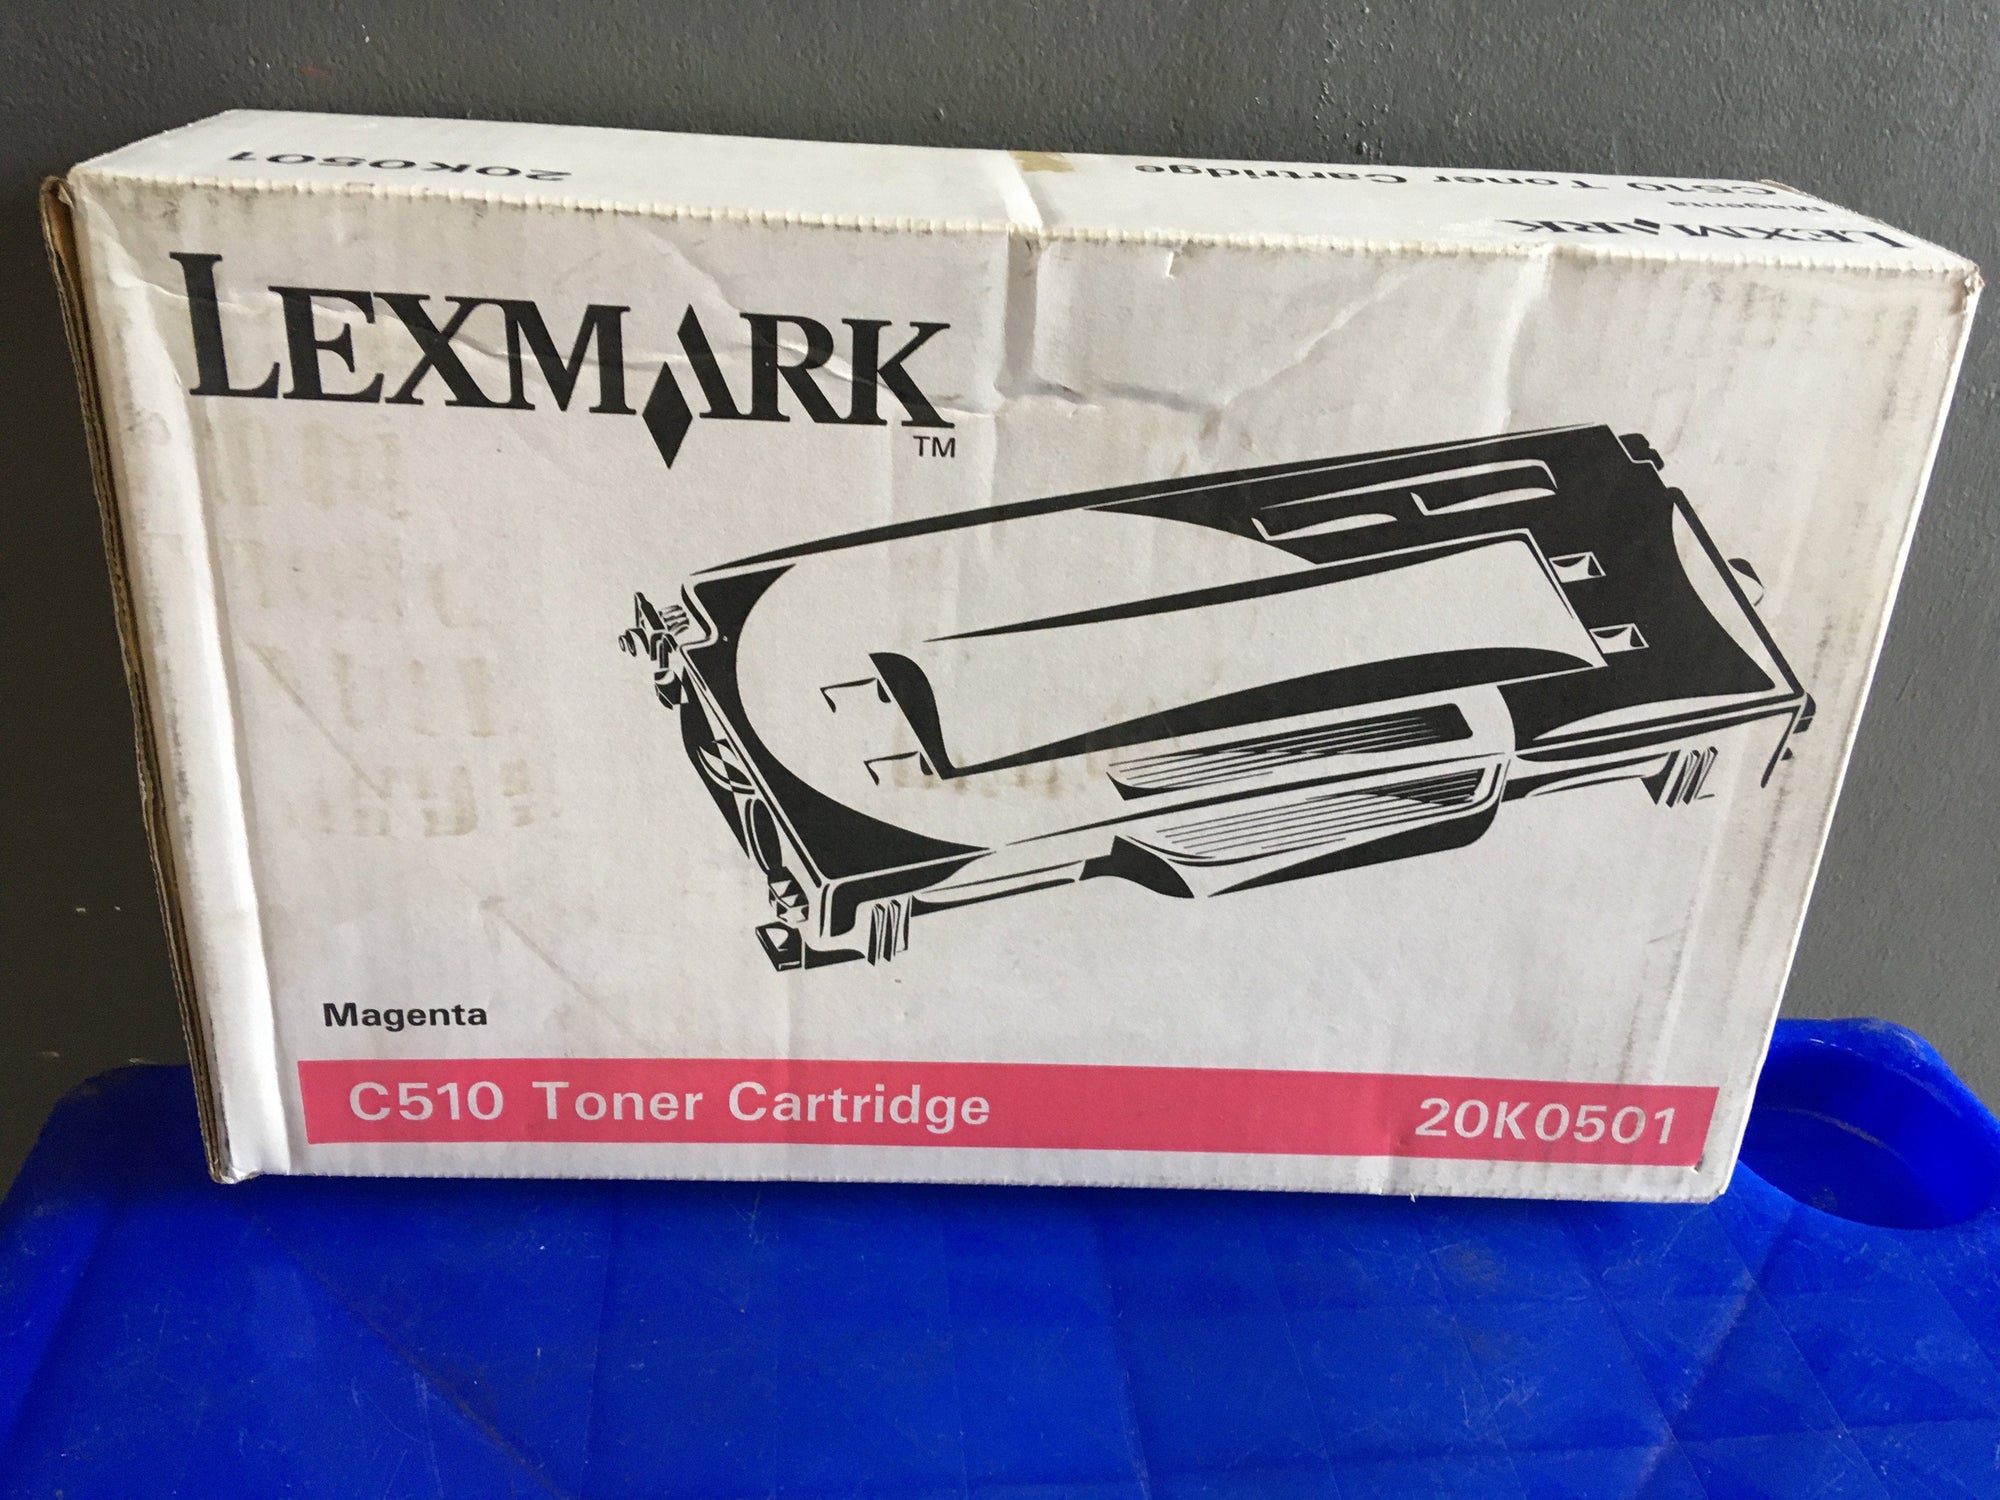 Lexmark Toner Cartridge (Magenta) - 2ndhandwarehouse.com